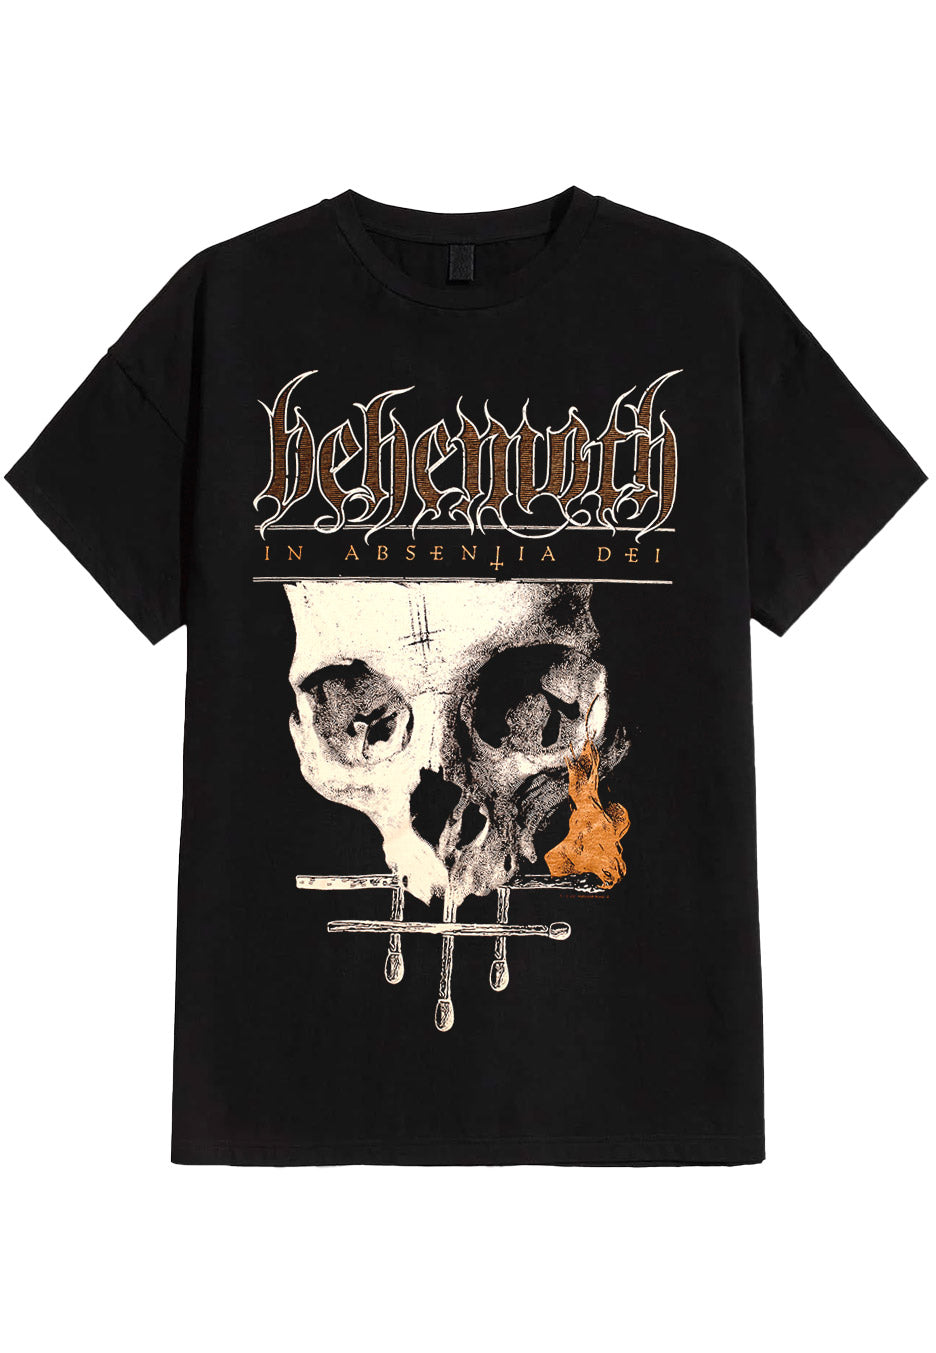 Behemoth - In Absentia Dei - T-Shirt